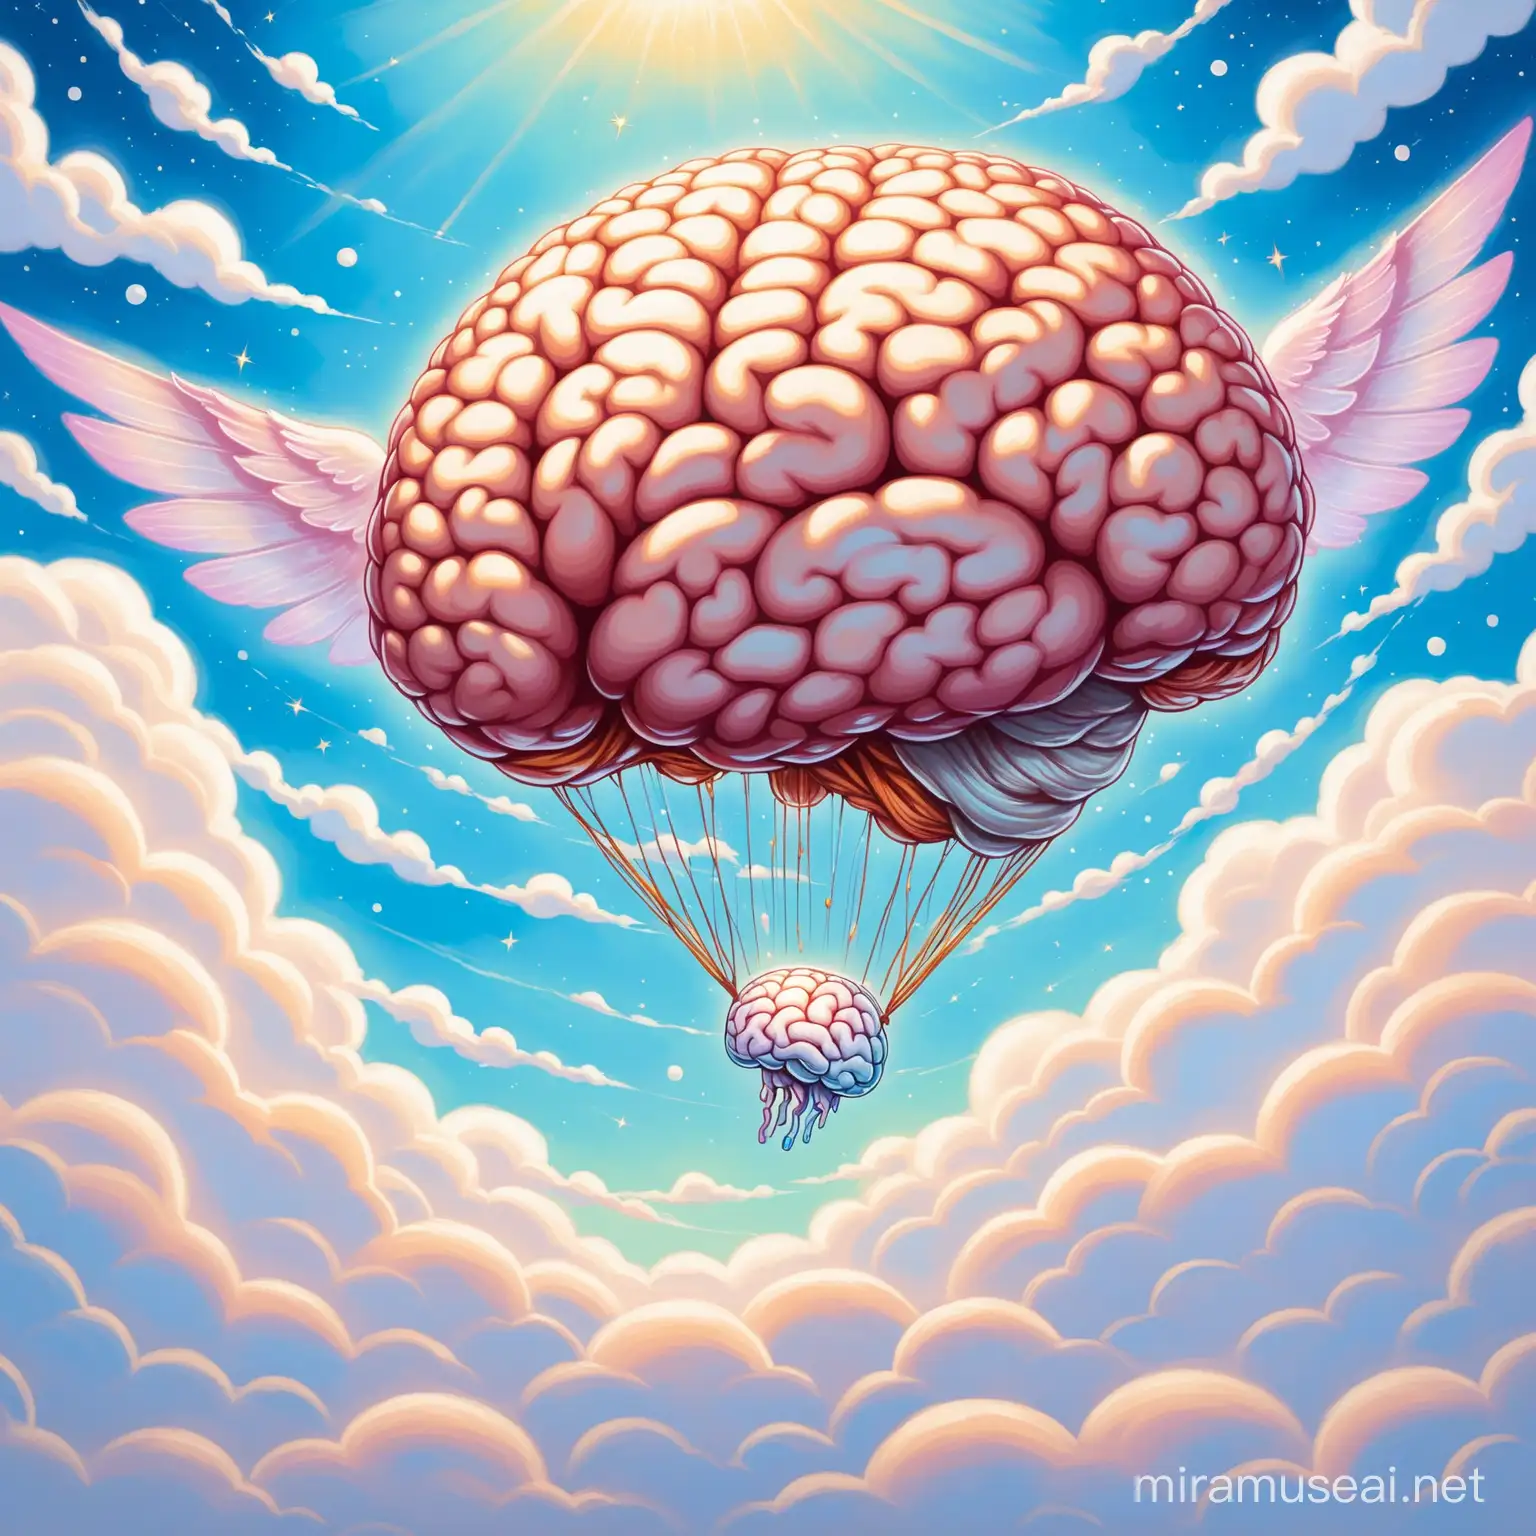 Flying Brain on Cloud Whimsical Surreal Artwork Depicting Cognitive Exploration